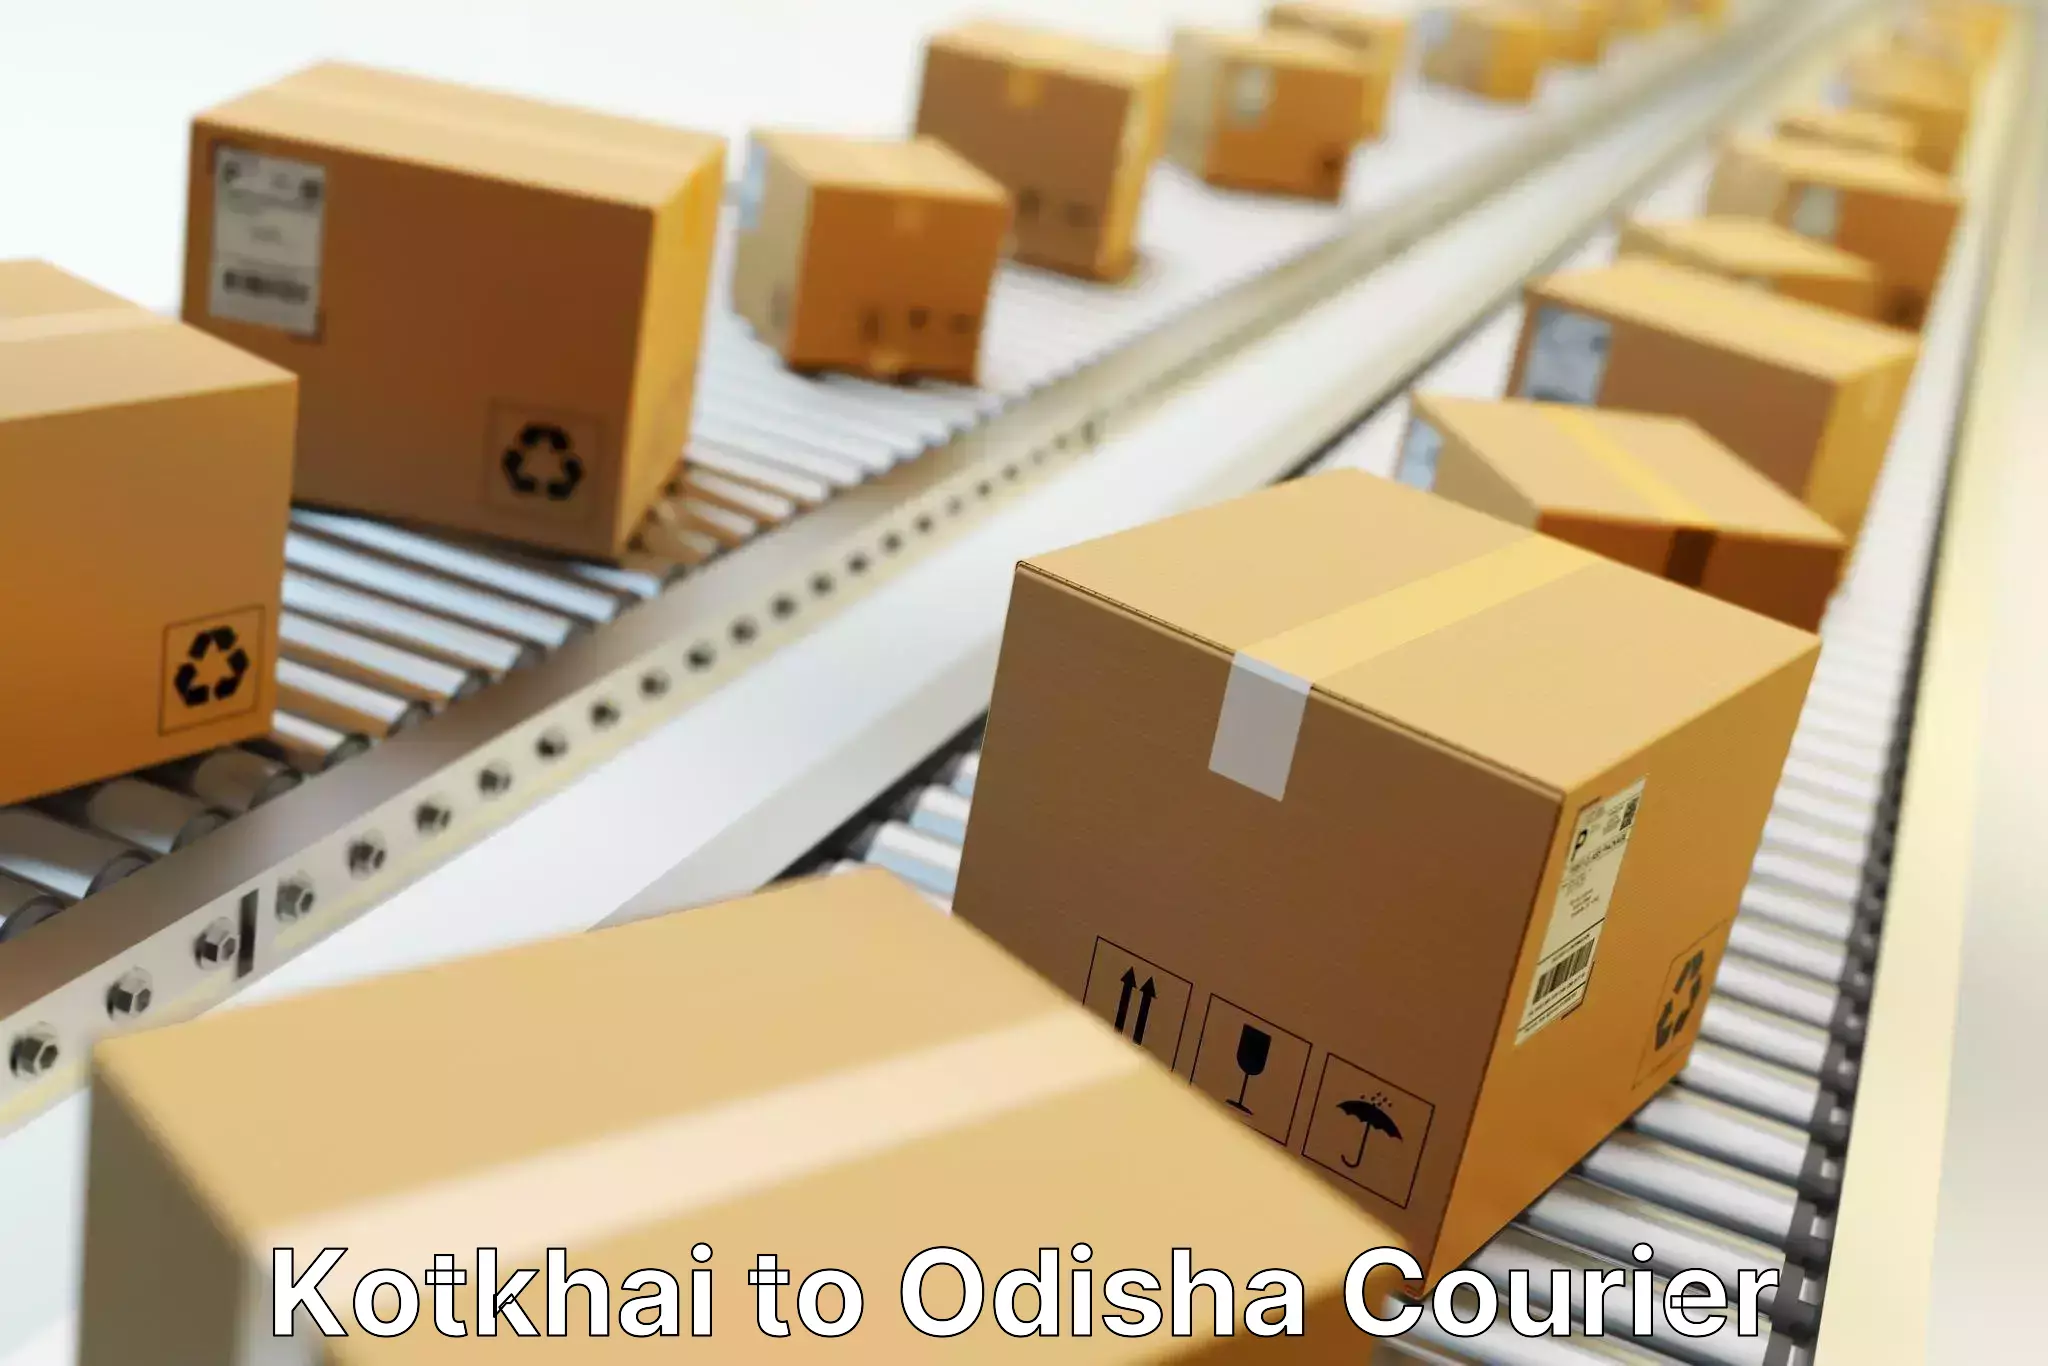 State-of-the-art courier technology Kotkhai to Chhendipada